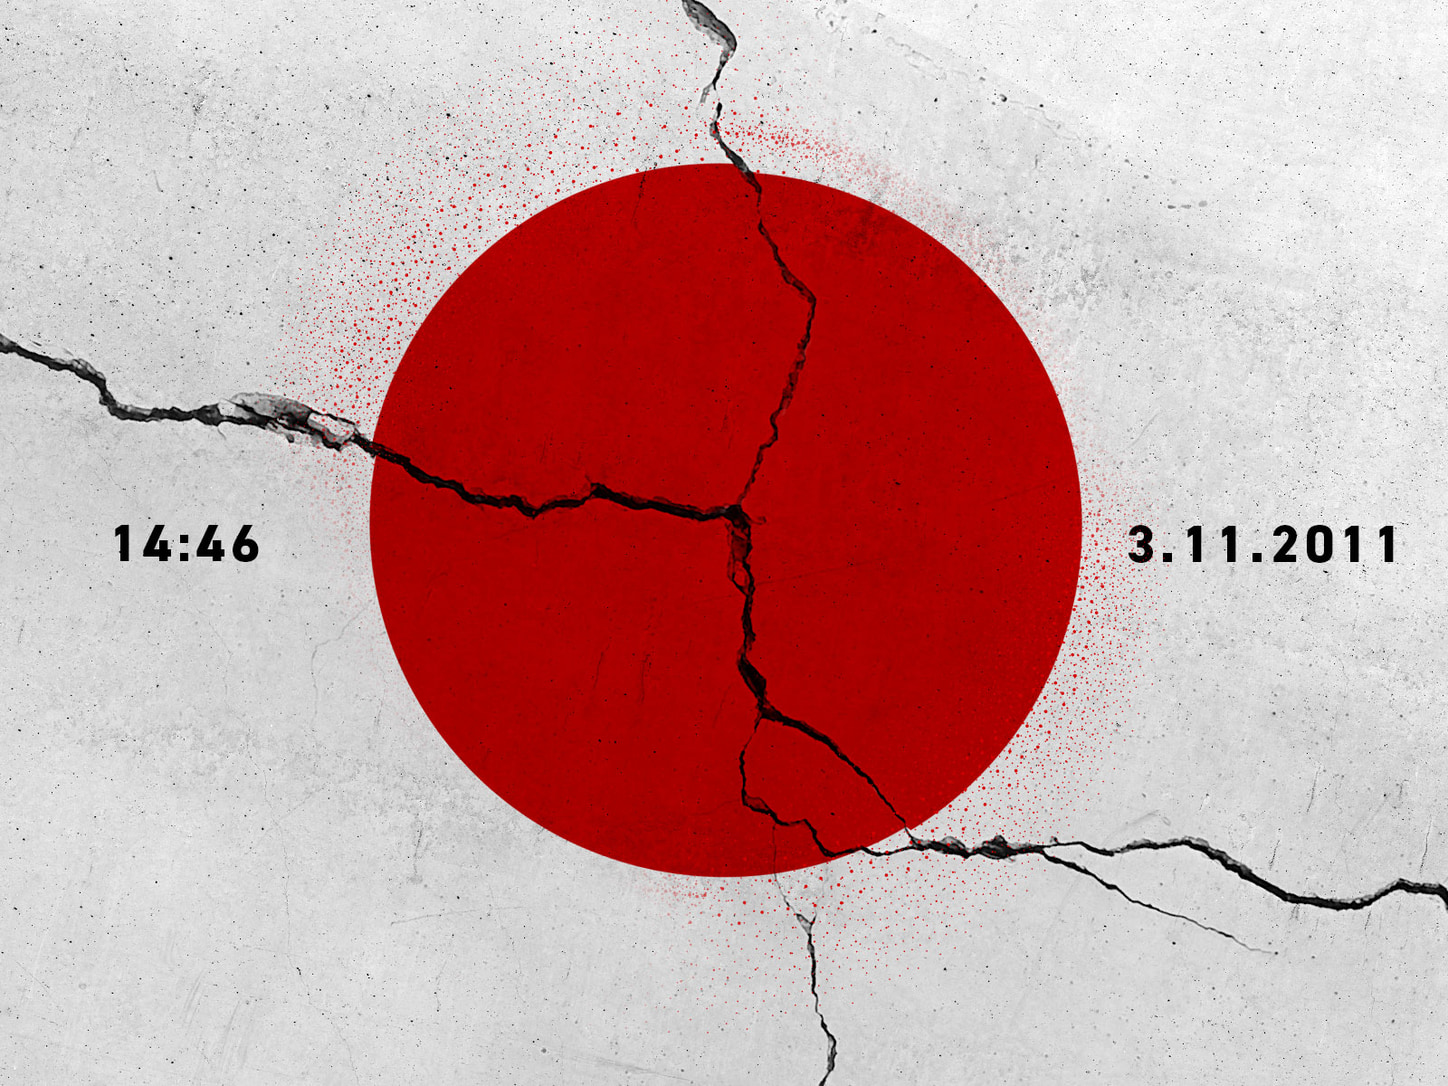 Remembering the 2011 Tohoku Earthquake and Tsunami: 10 Years Later